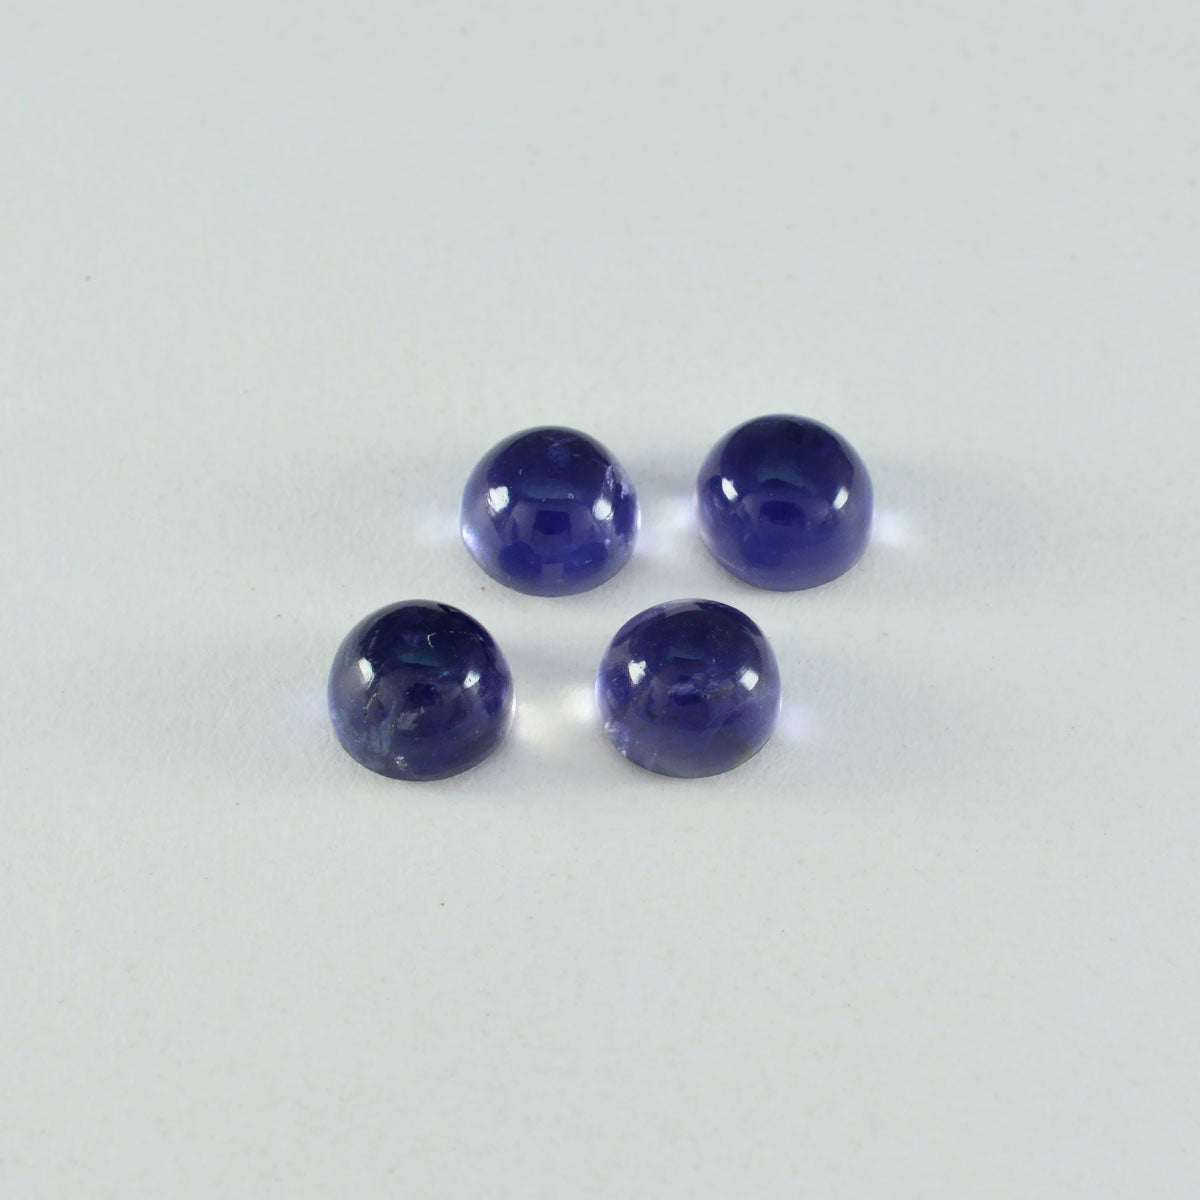 Riyogems 1PC Blue Iolite Cabochon 9x9 mm Round Shape A1 Quality Loose Stone